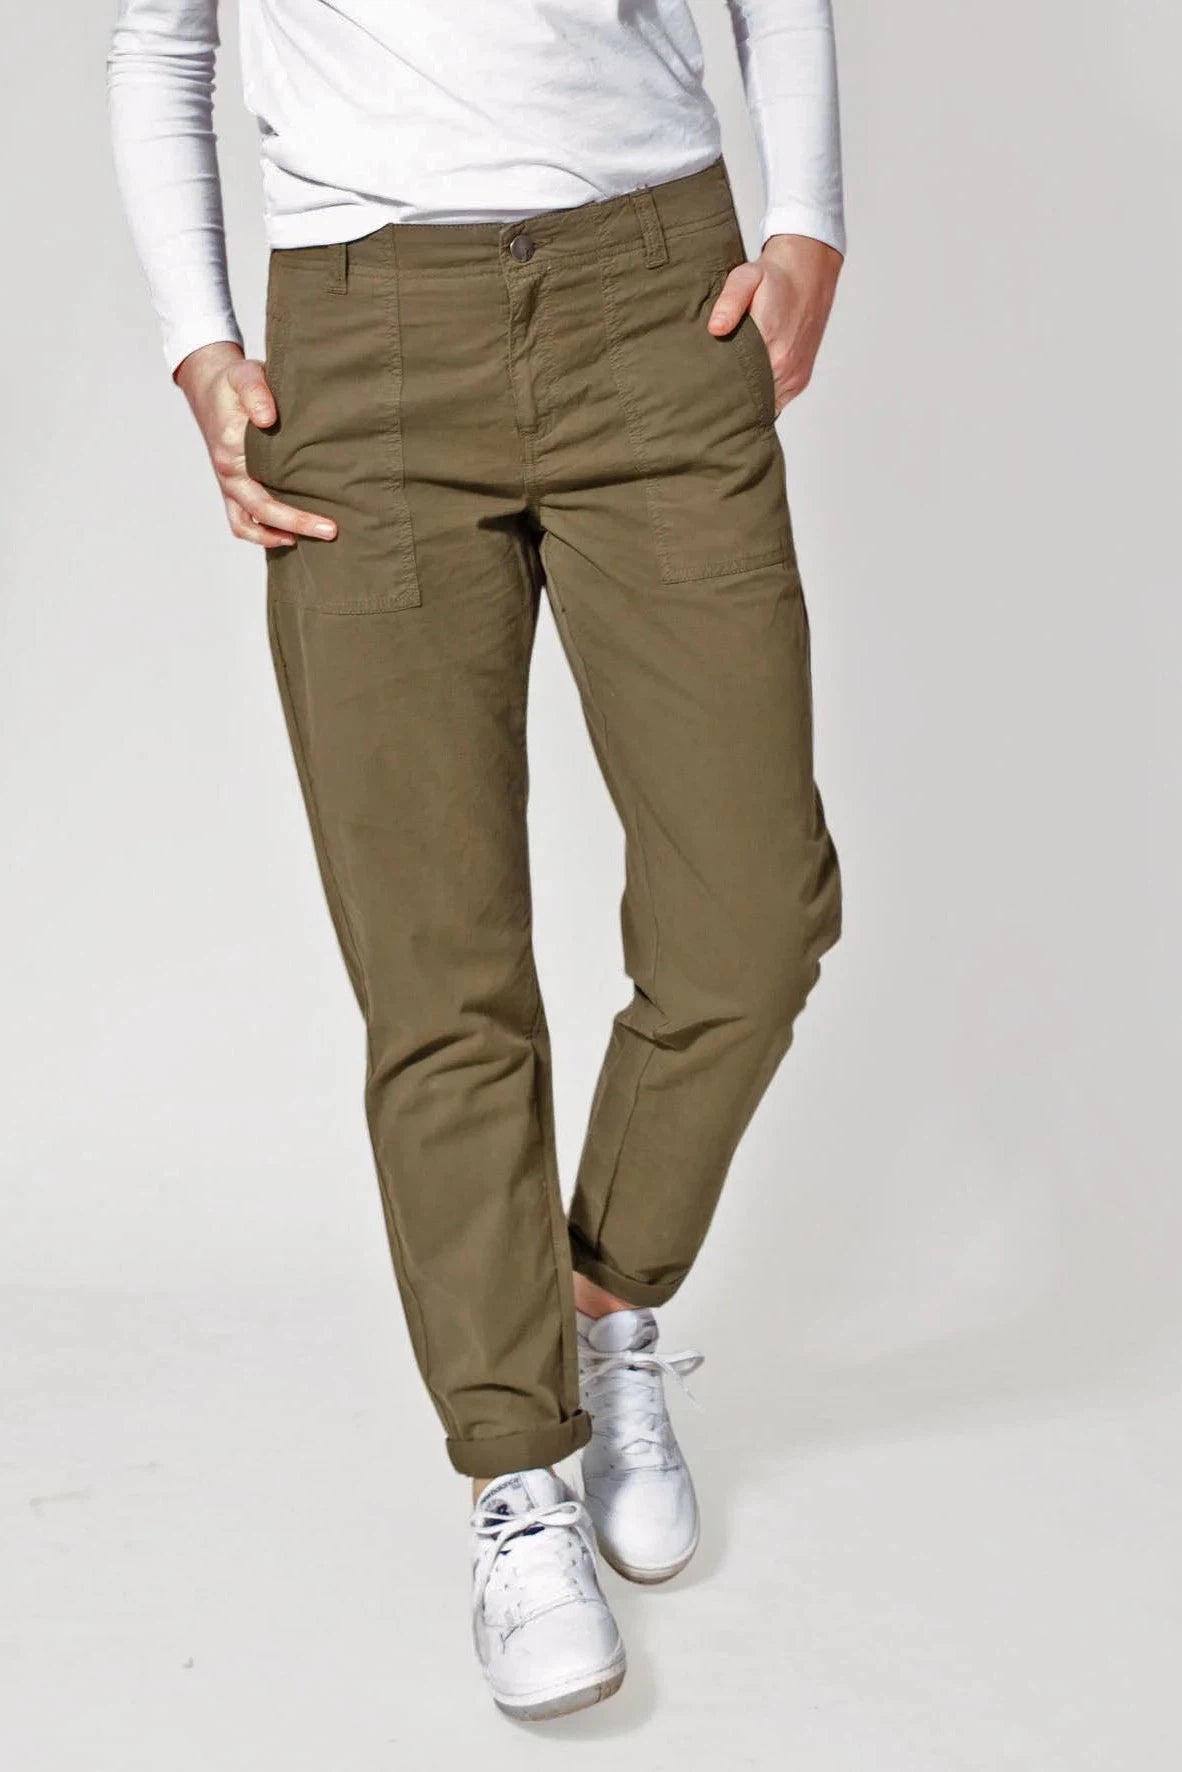 M&S Lightweight Cargo Trousers Khaki / 8 / Short